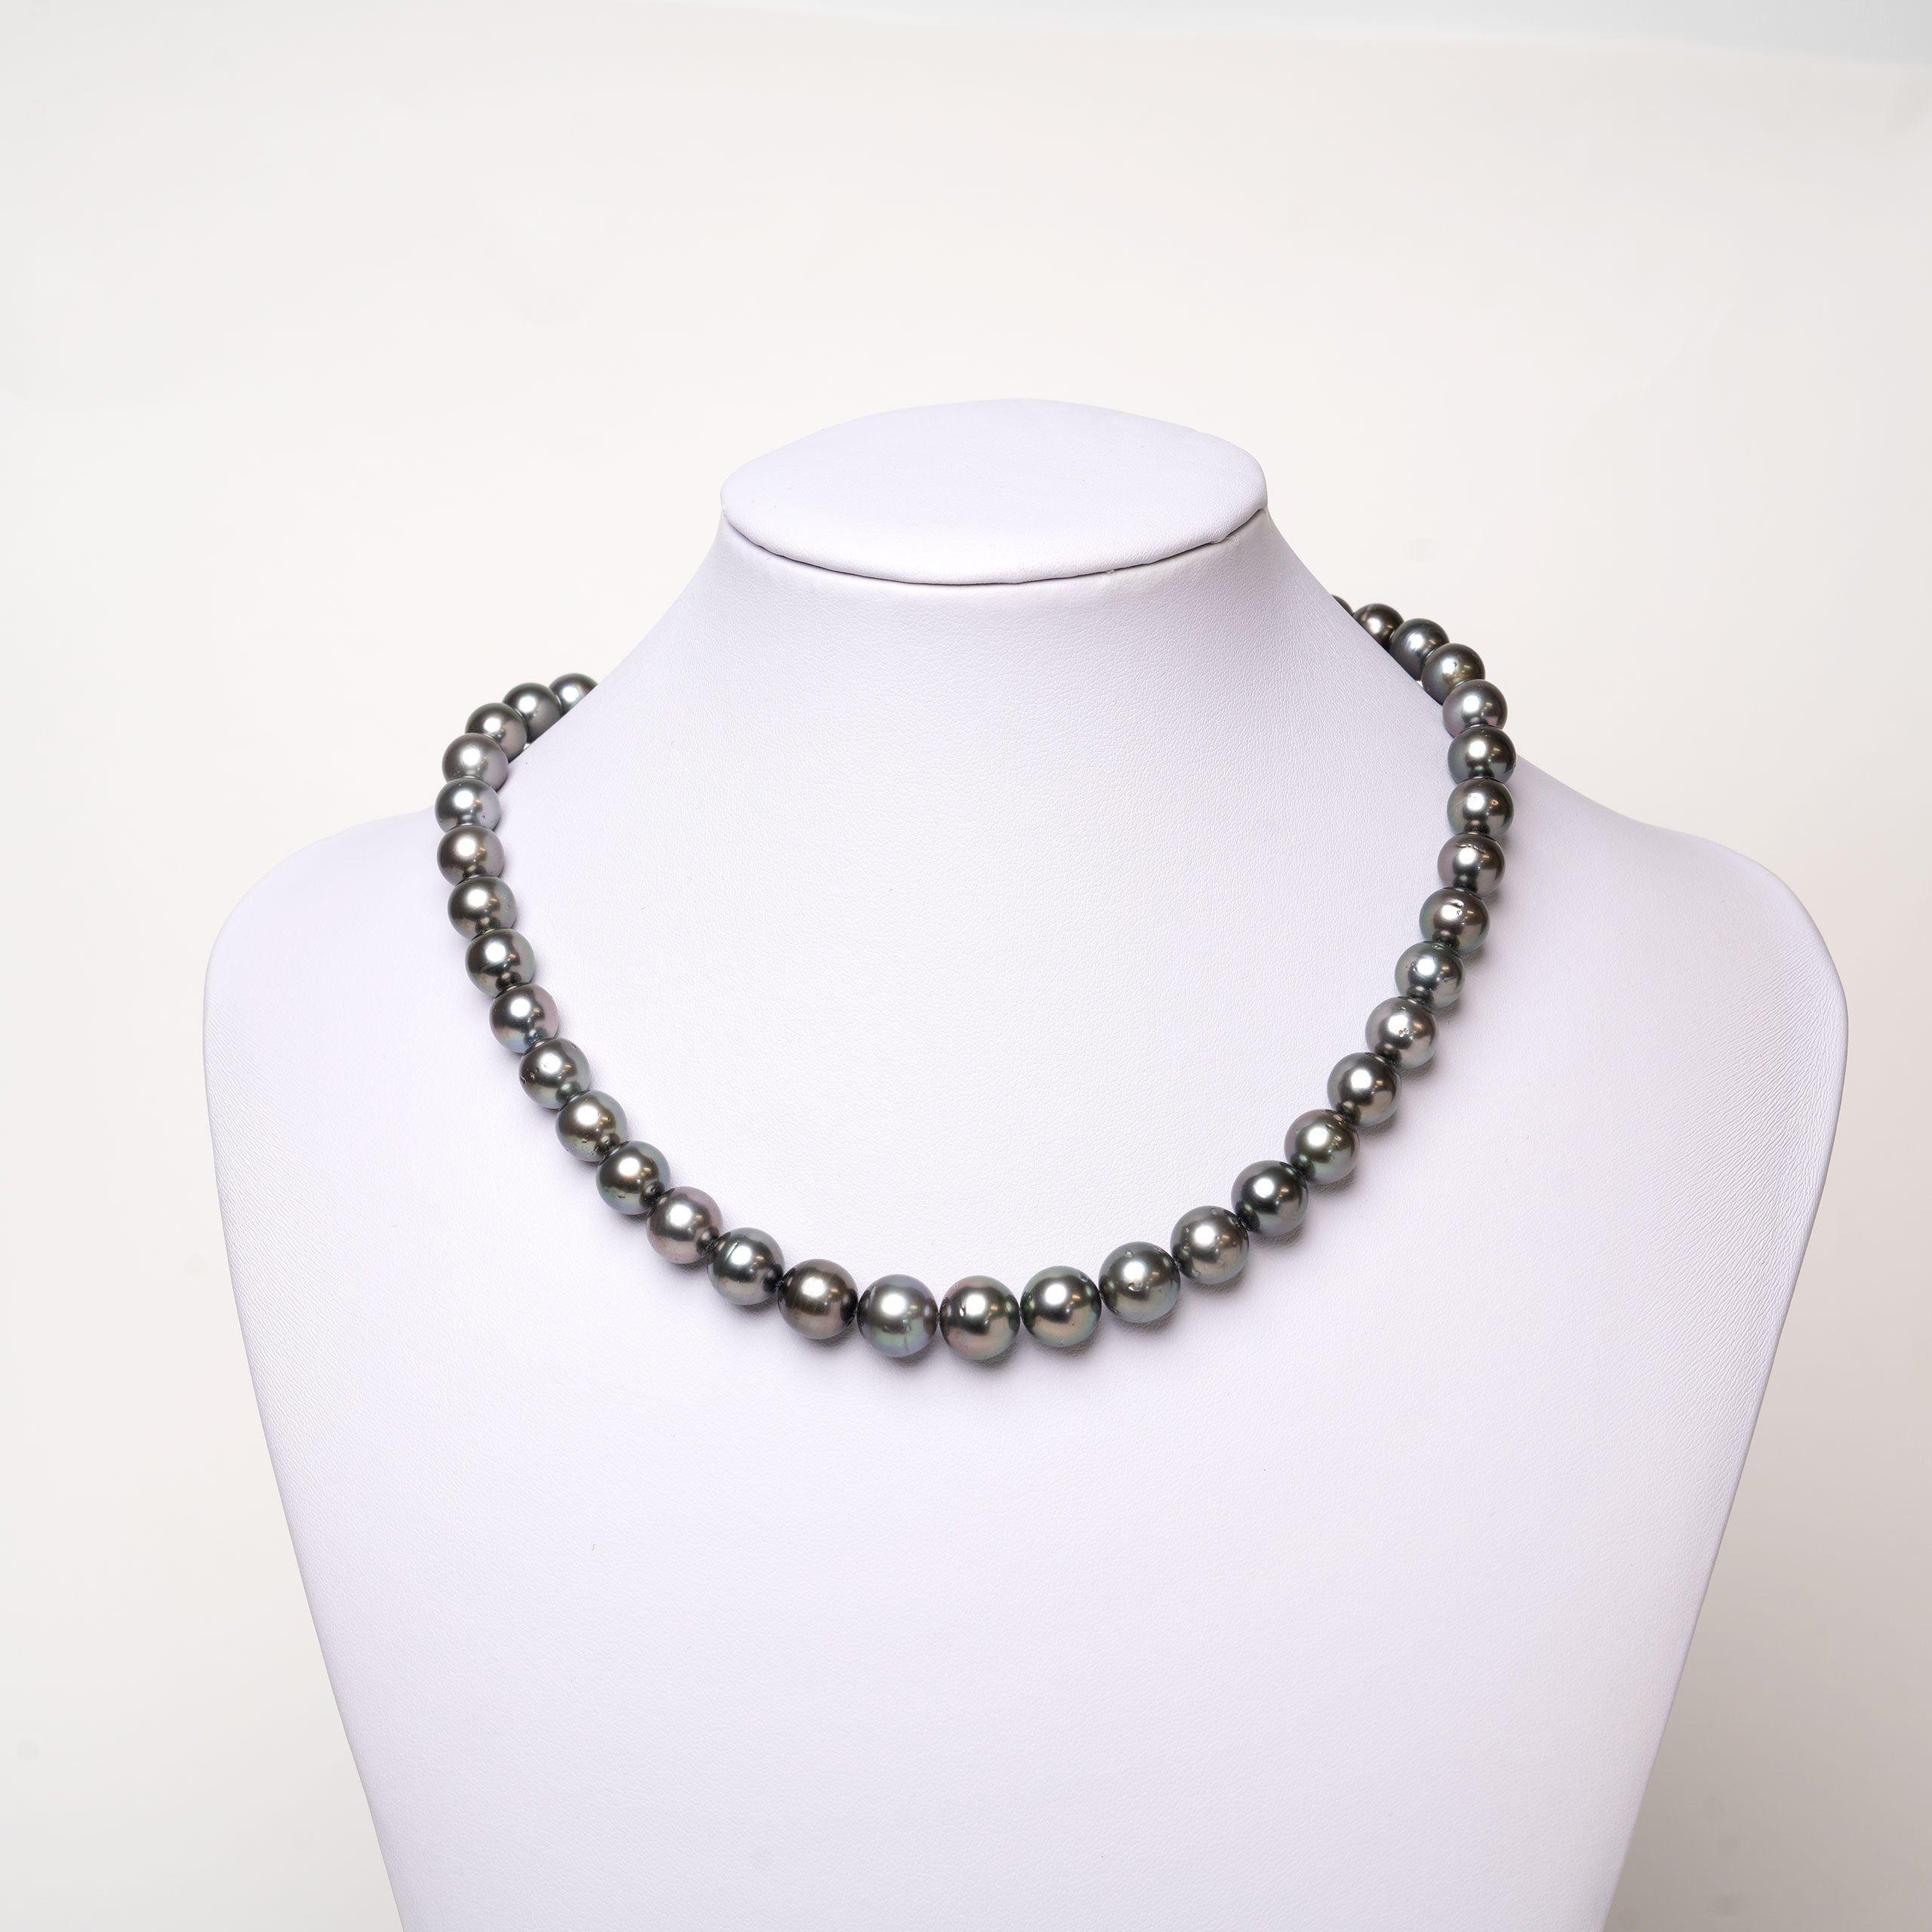 Collar de perlas cultivadas naturales Tahití redondas de 8 a 11 mm de color gris profundo. 